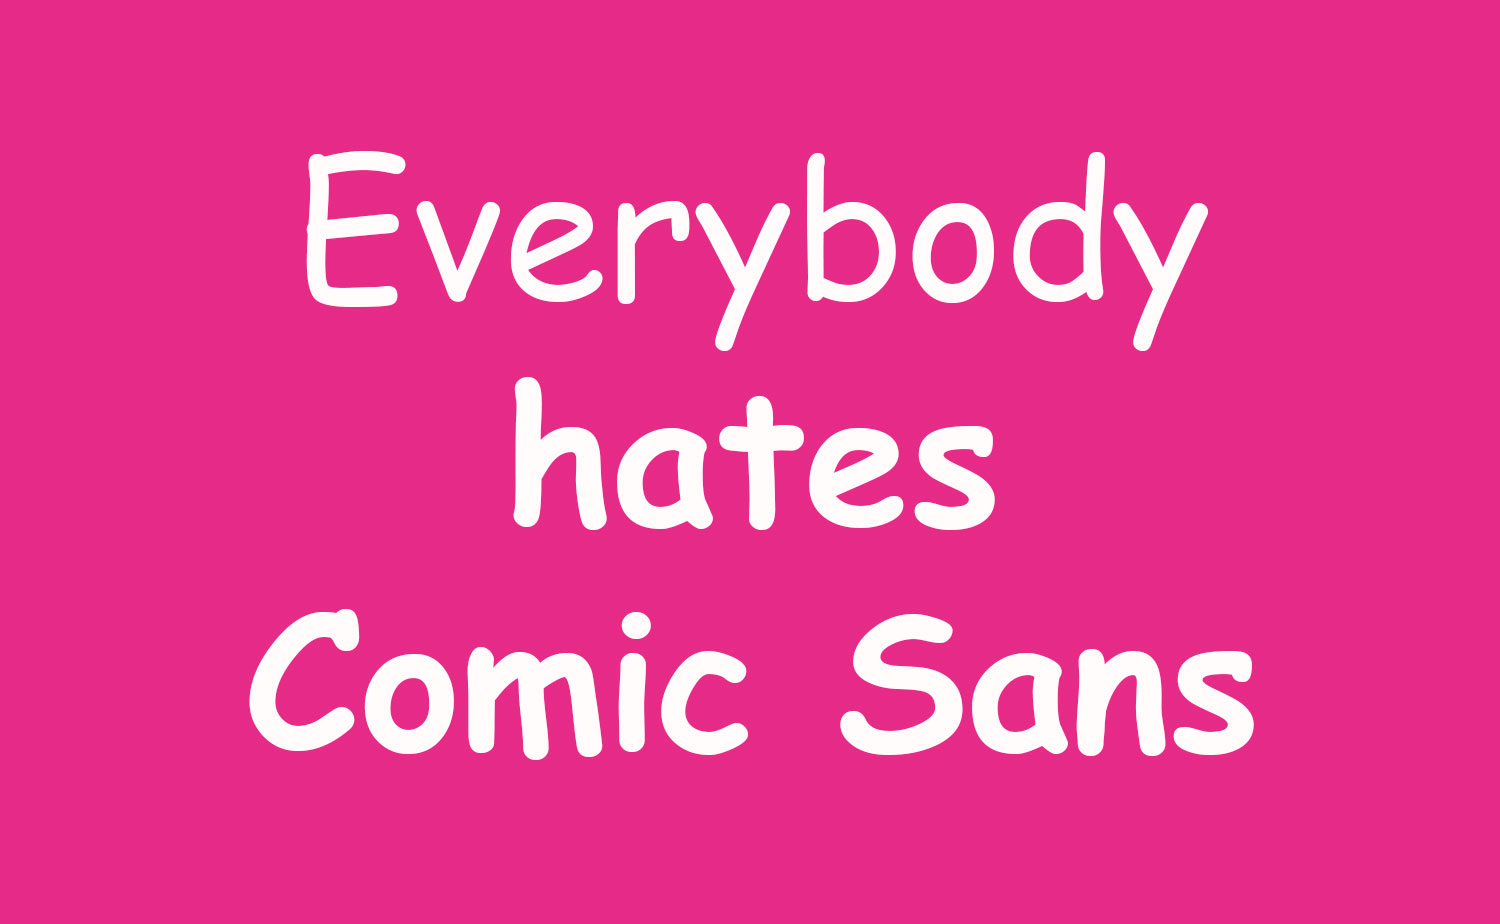 Everybody hates Comic Sans